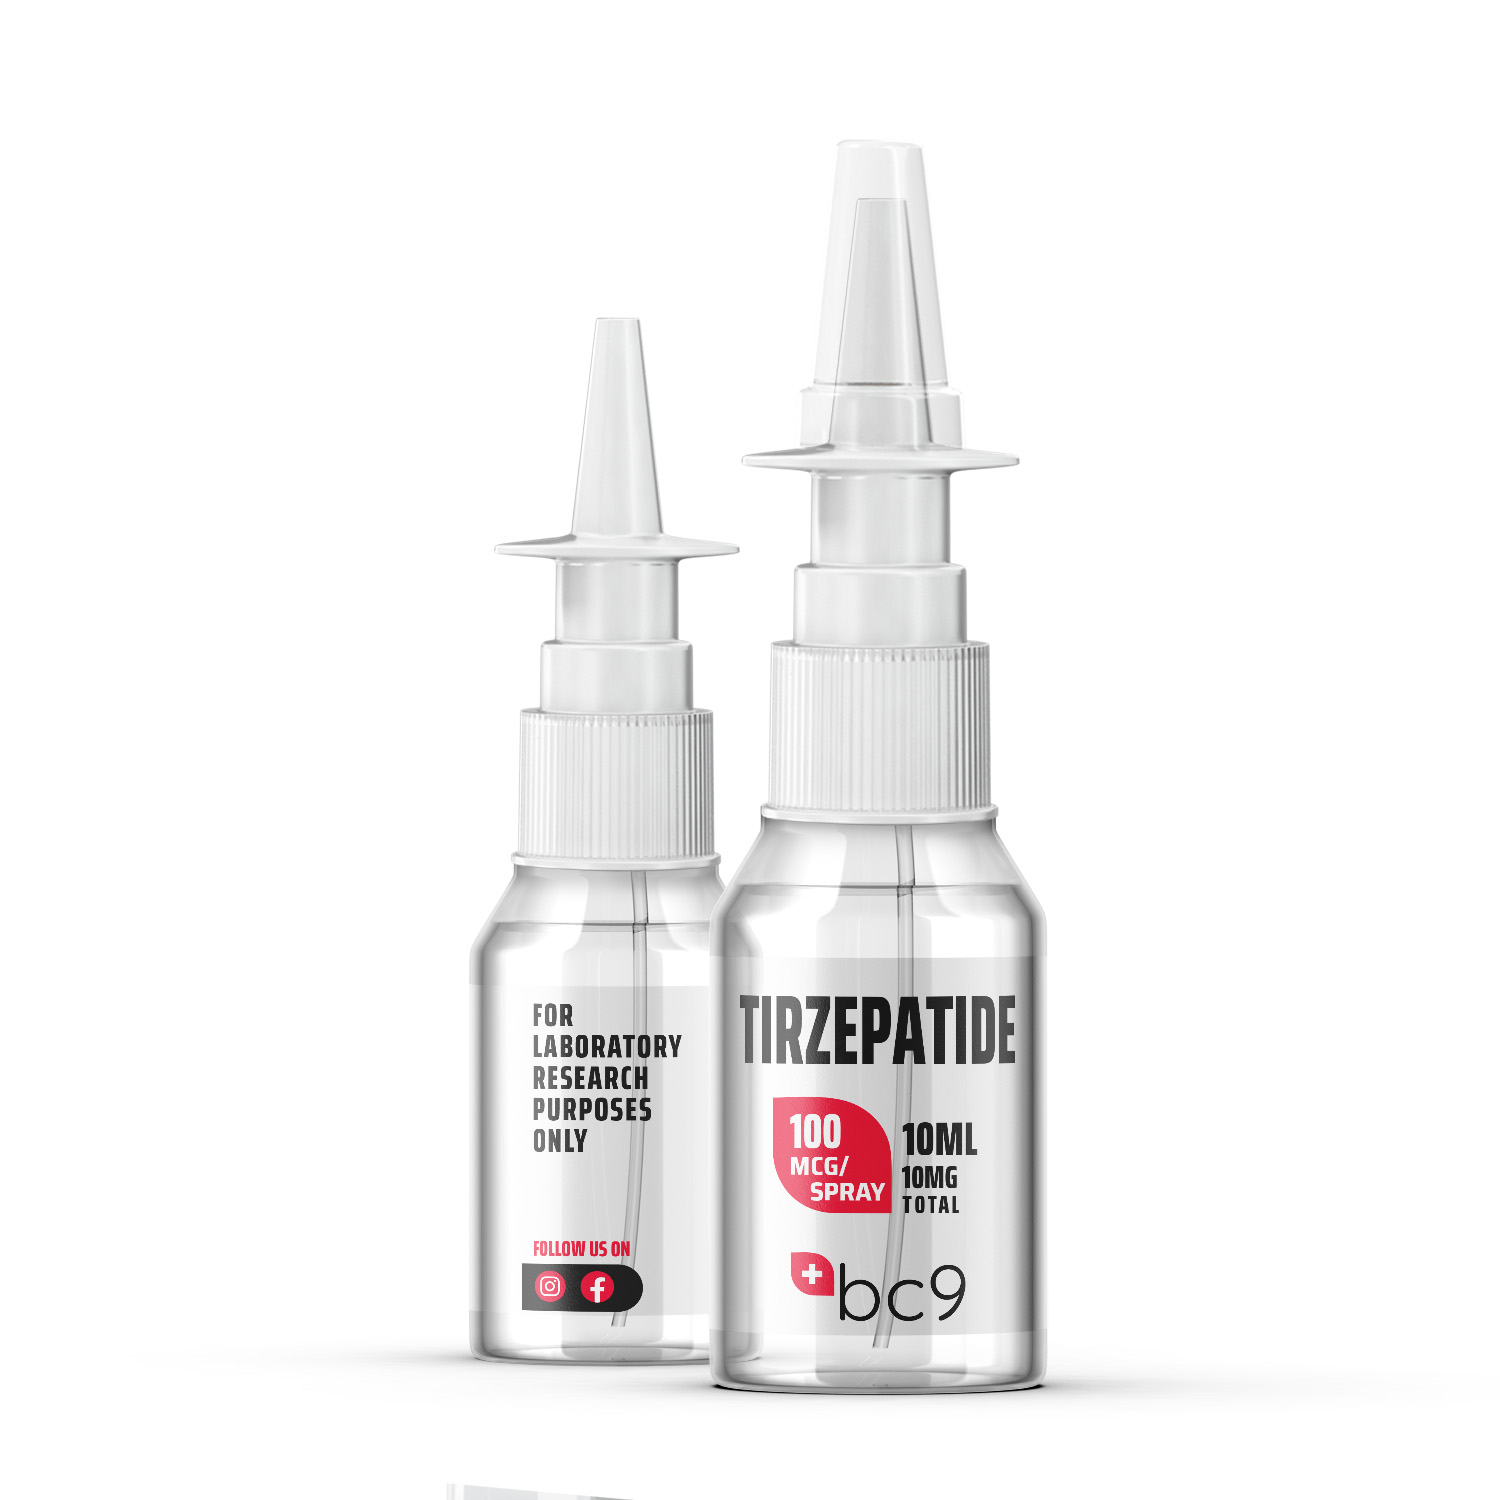 Tirzepatide Nasal Spray | BC9